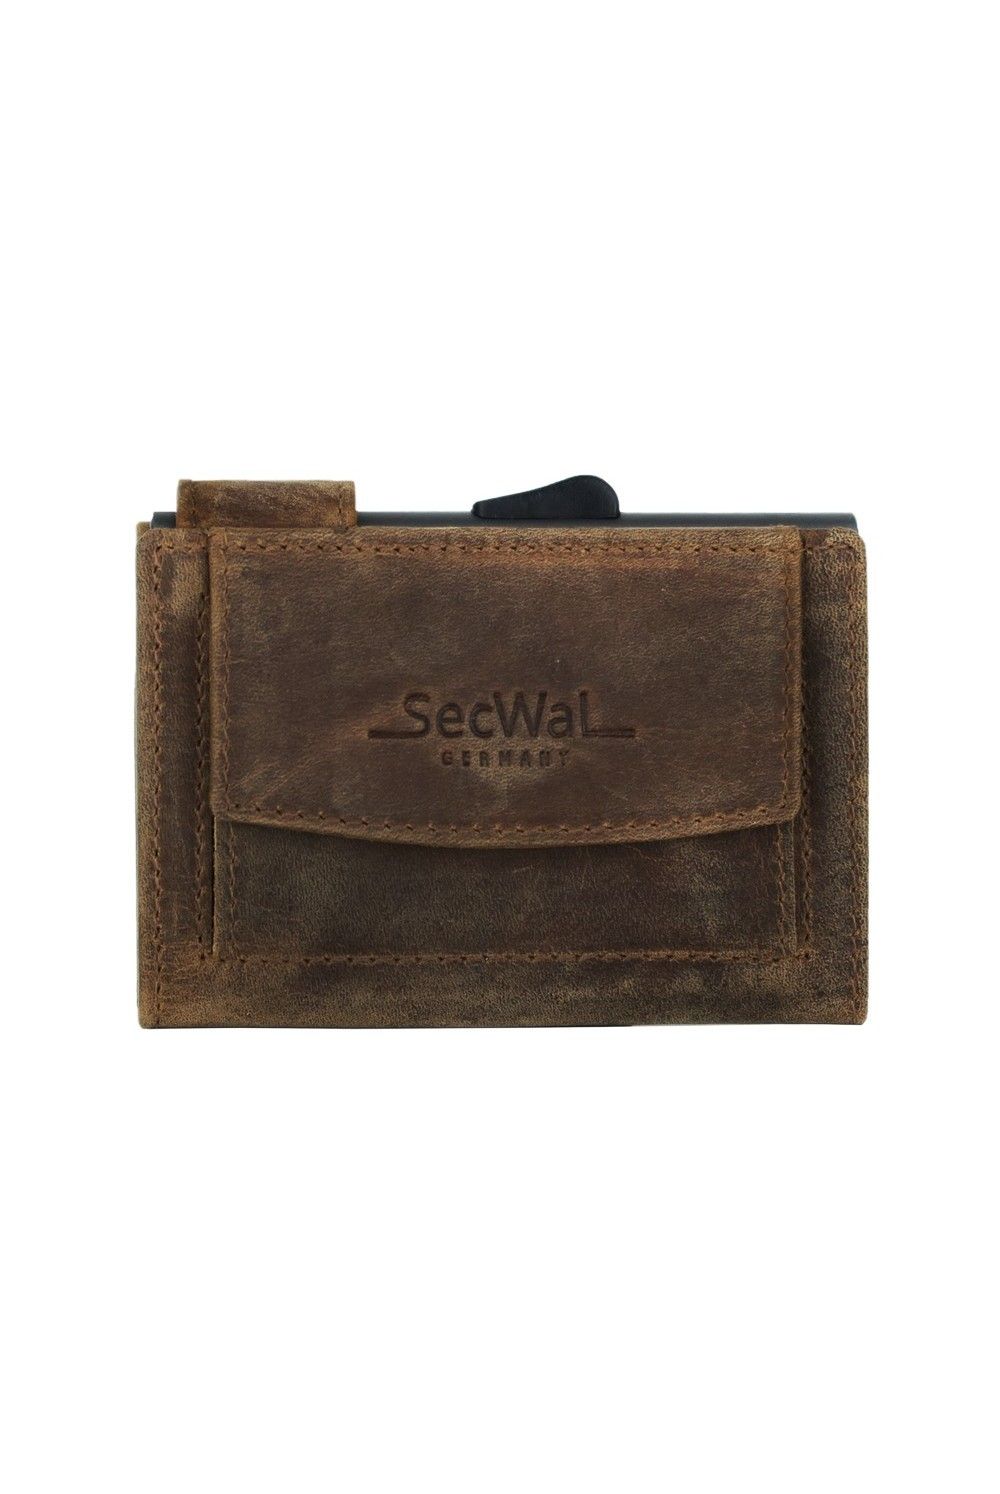 SecWal Card Case XL DK Leather Hunter Brown